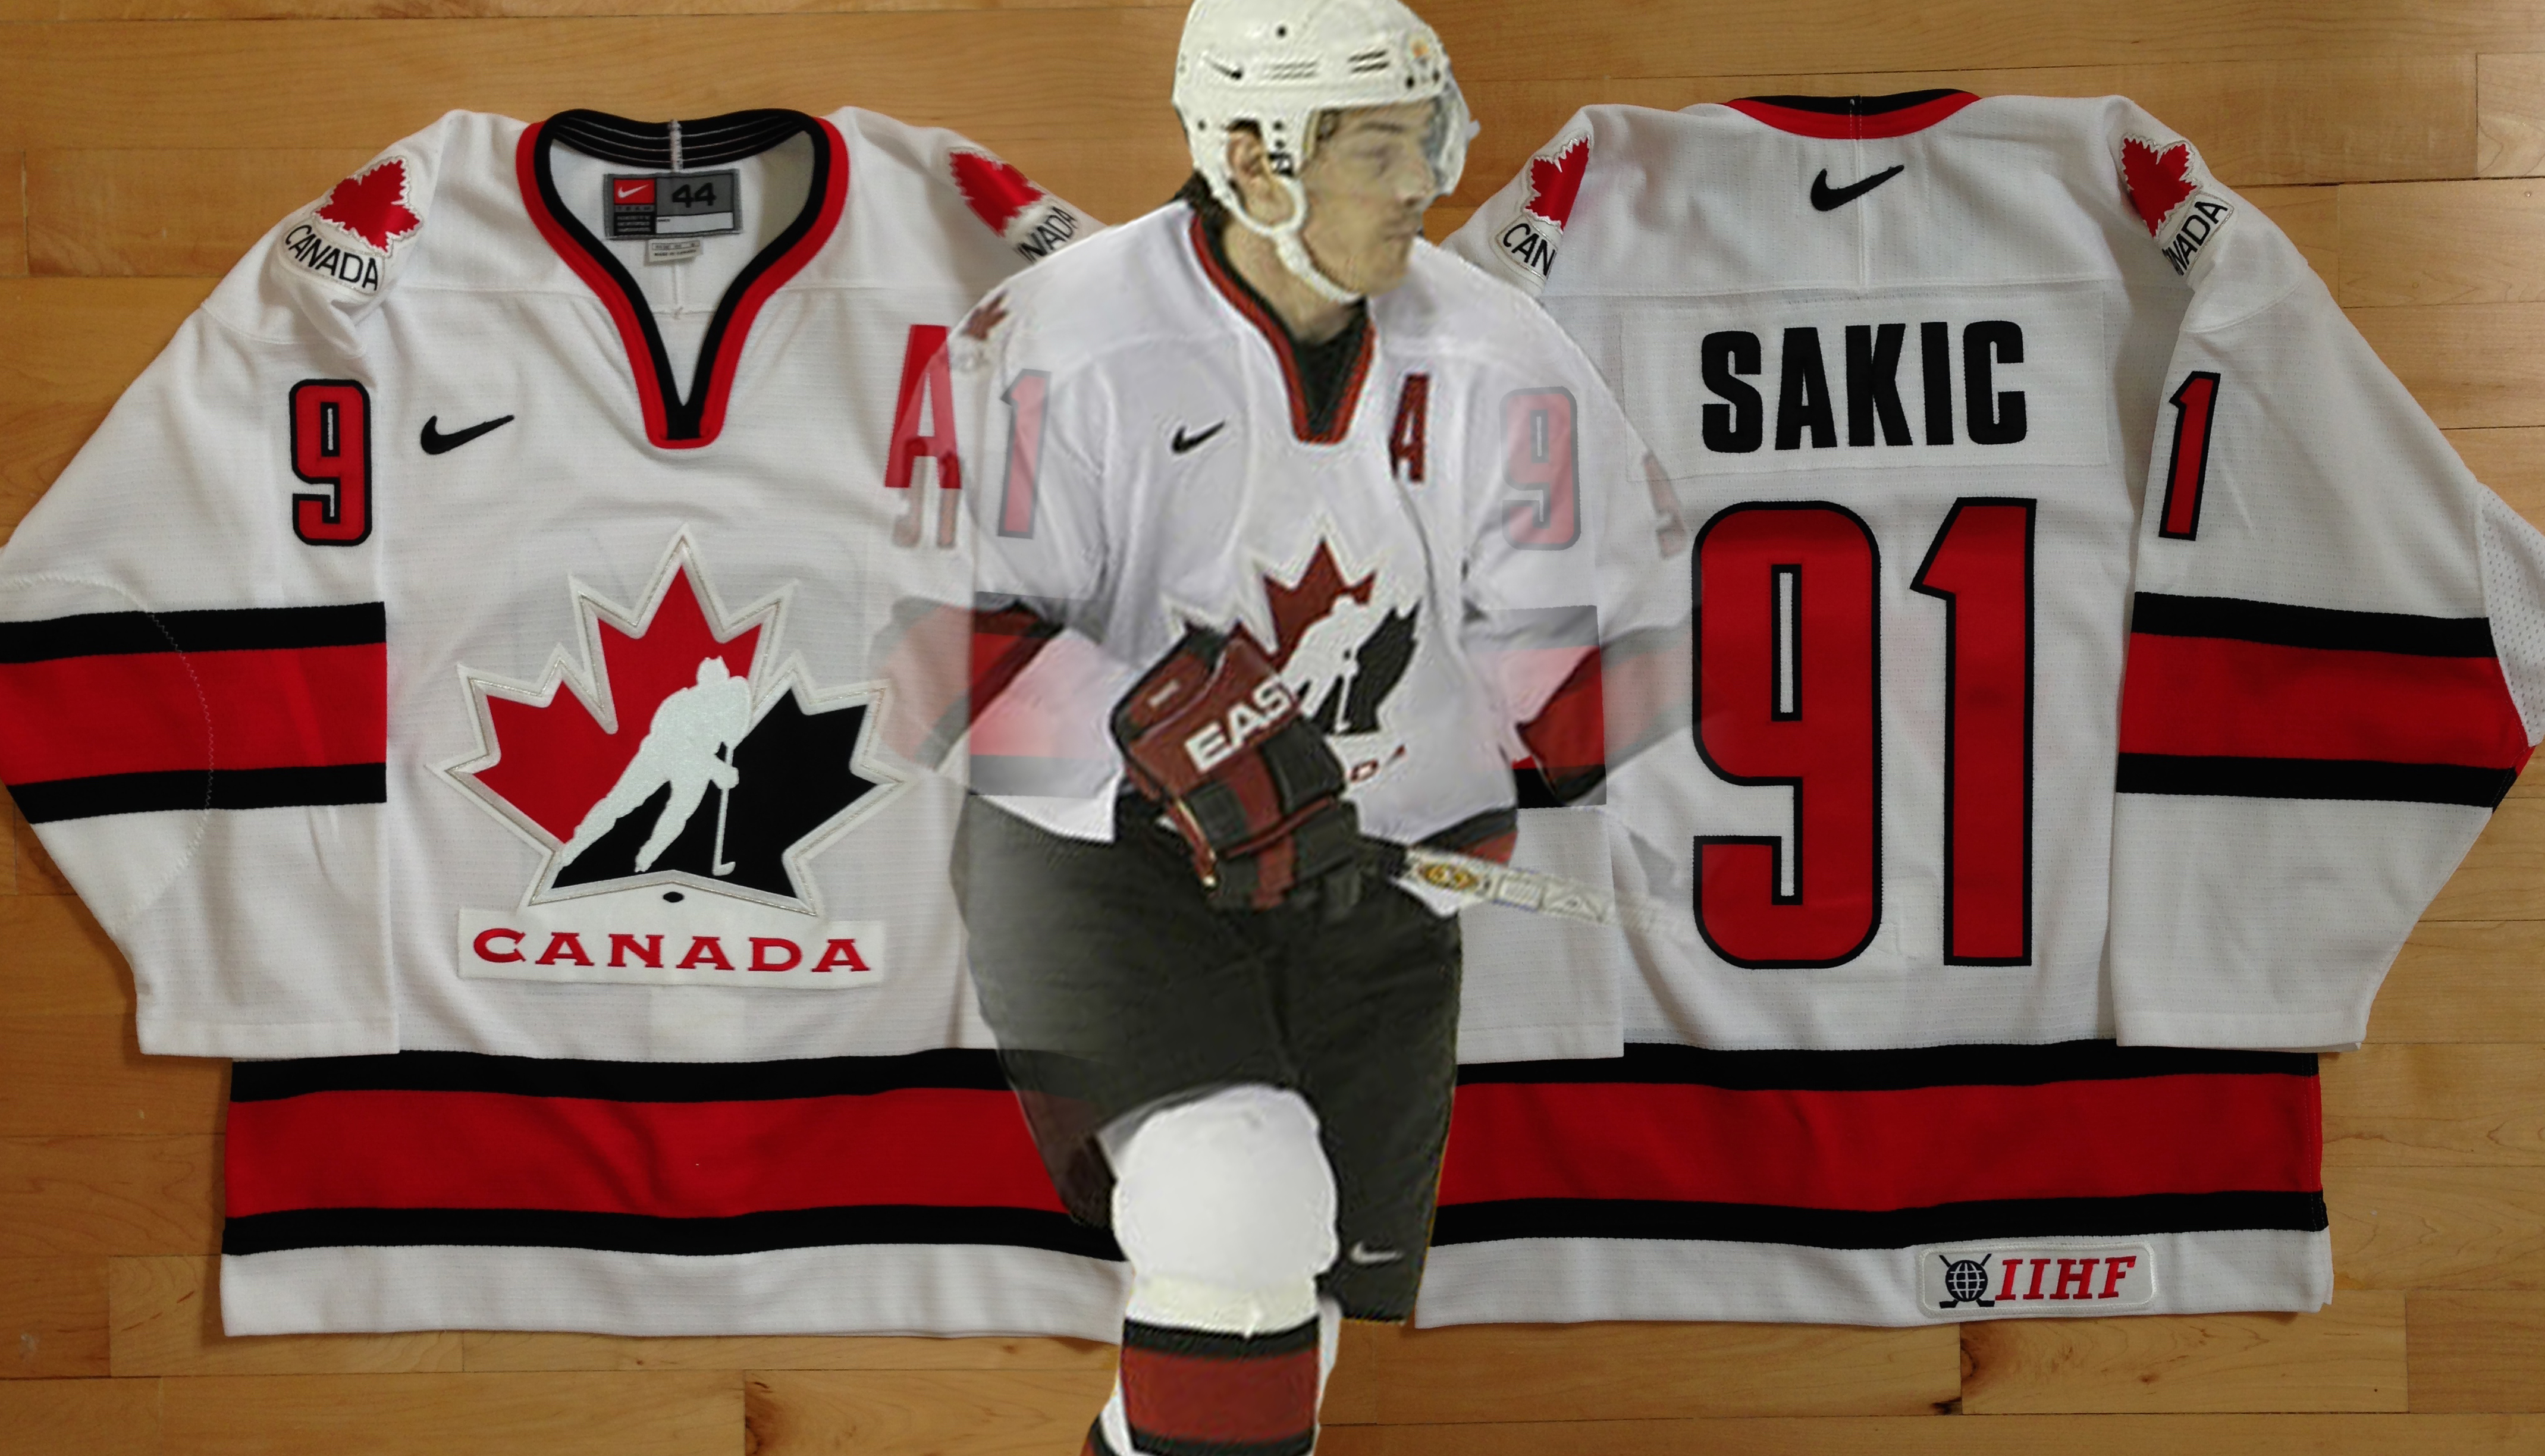 2002 team canada jersey